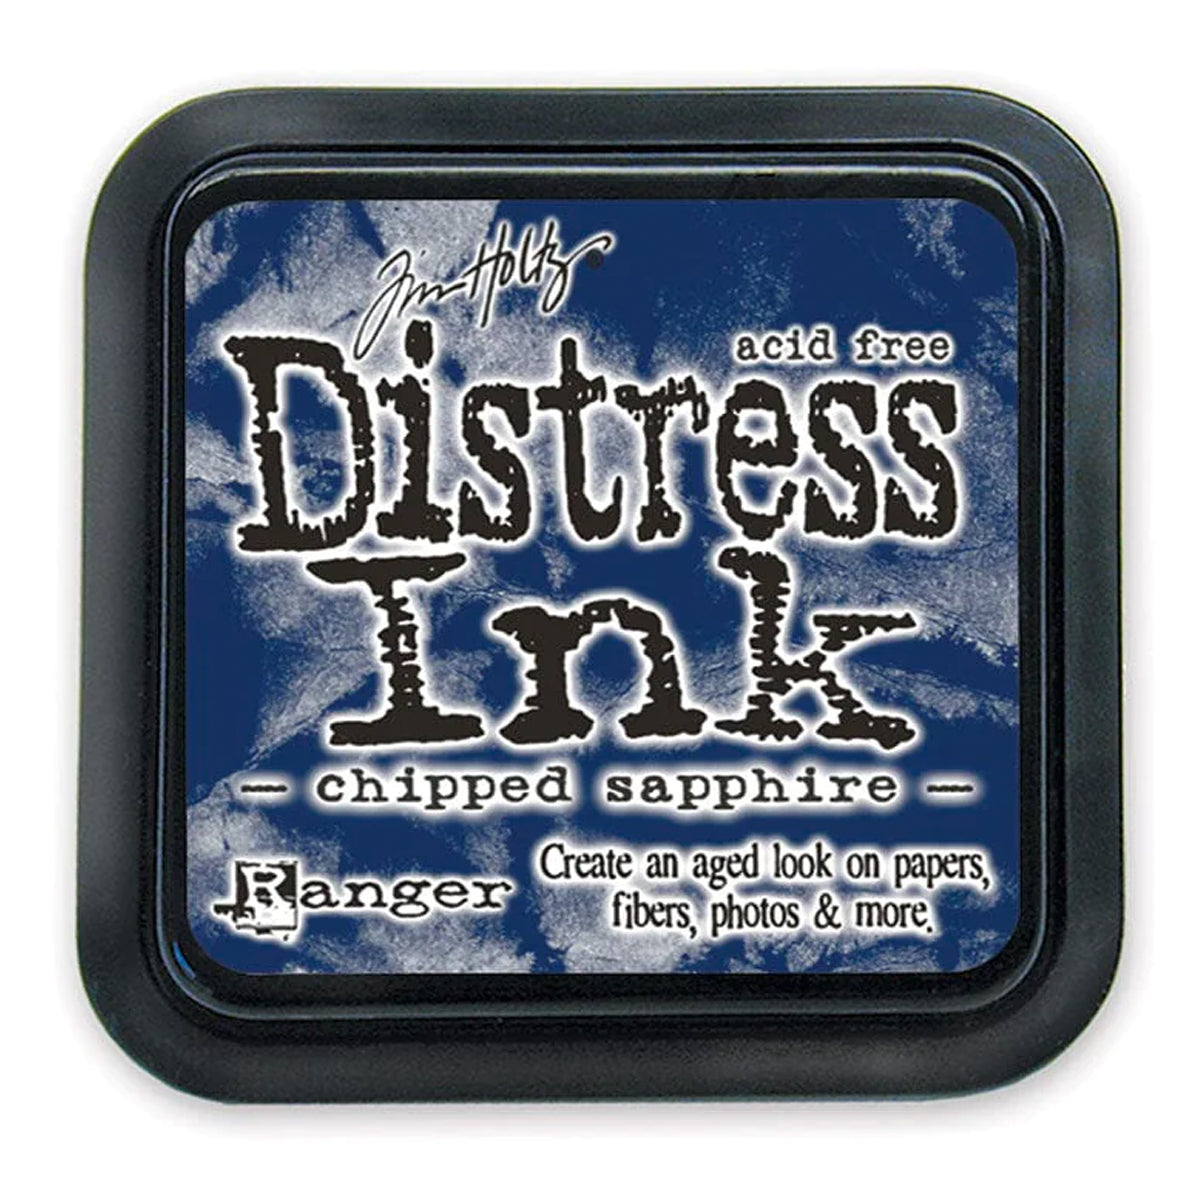 Tim Holtz Distress Dye Ink Pad - Chipped Sapphire